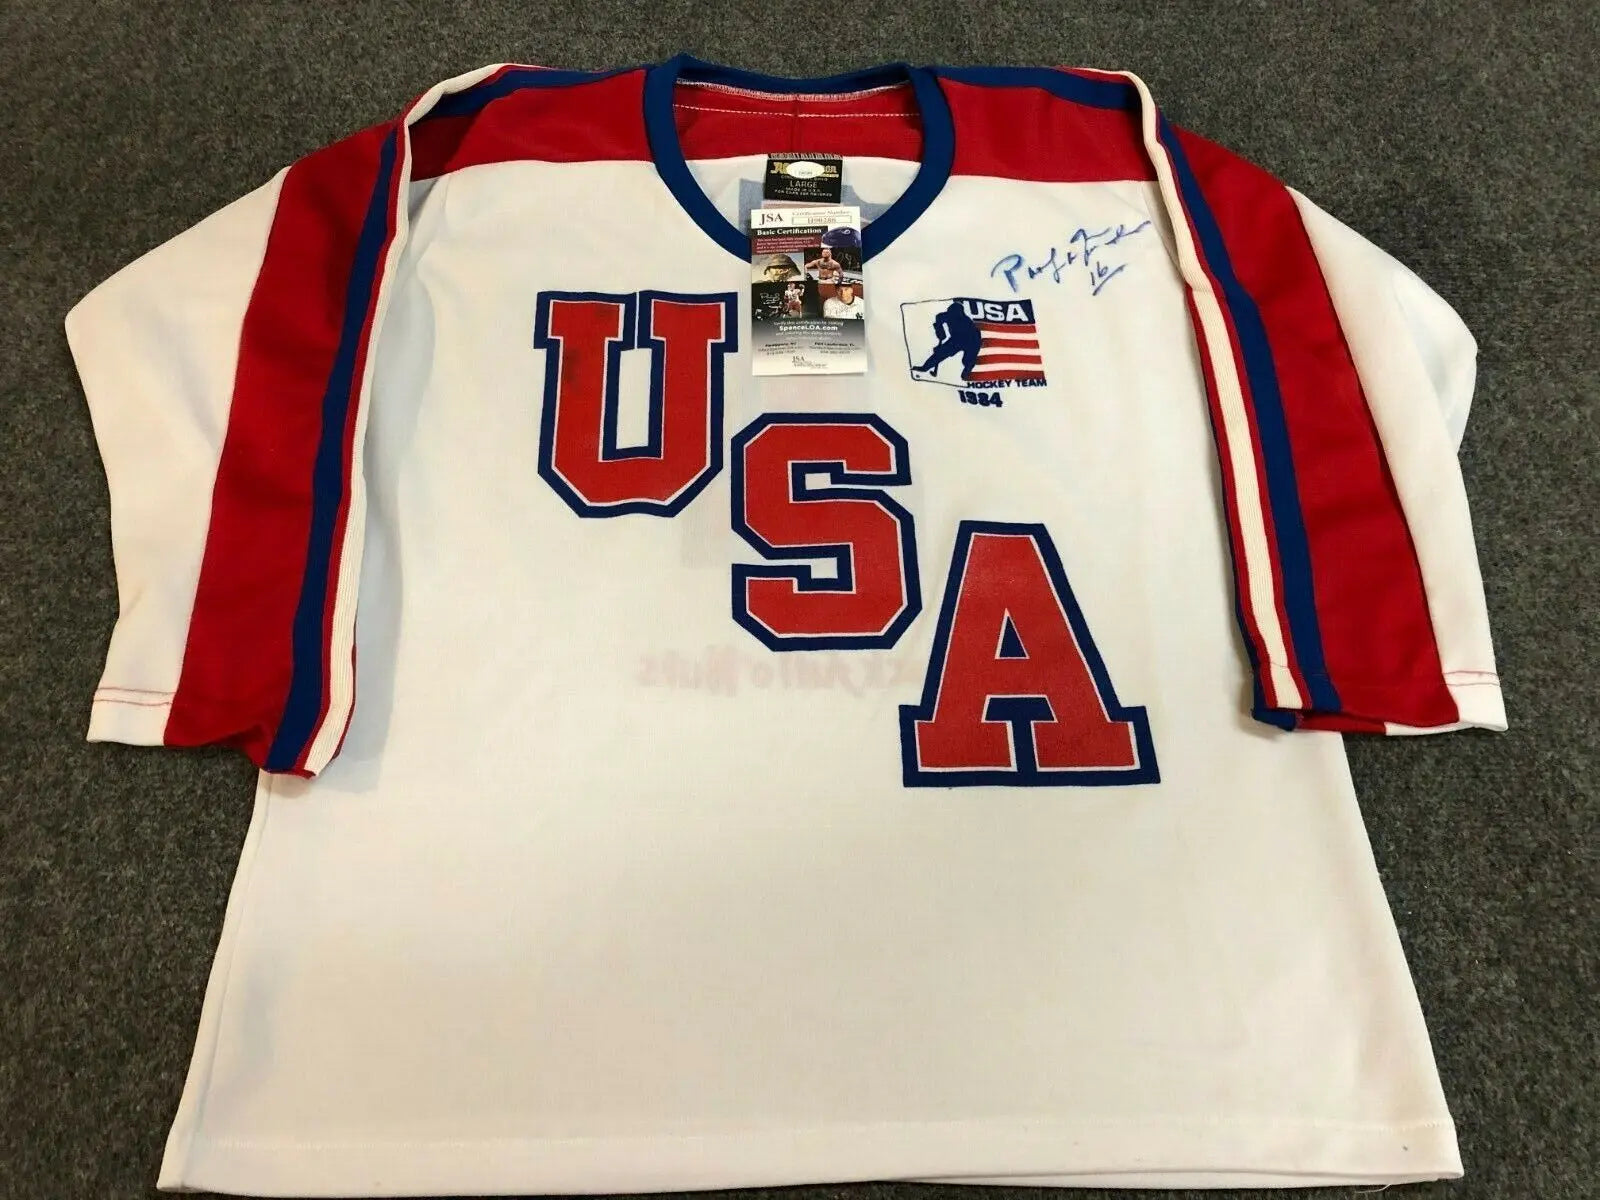 USA Hockey Jerseys and USA Hockey merchandise